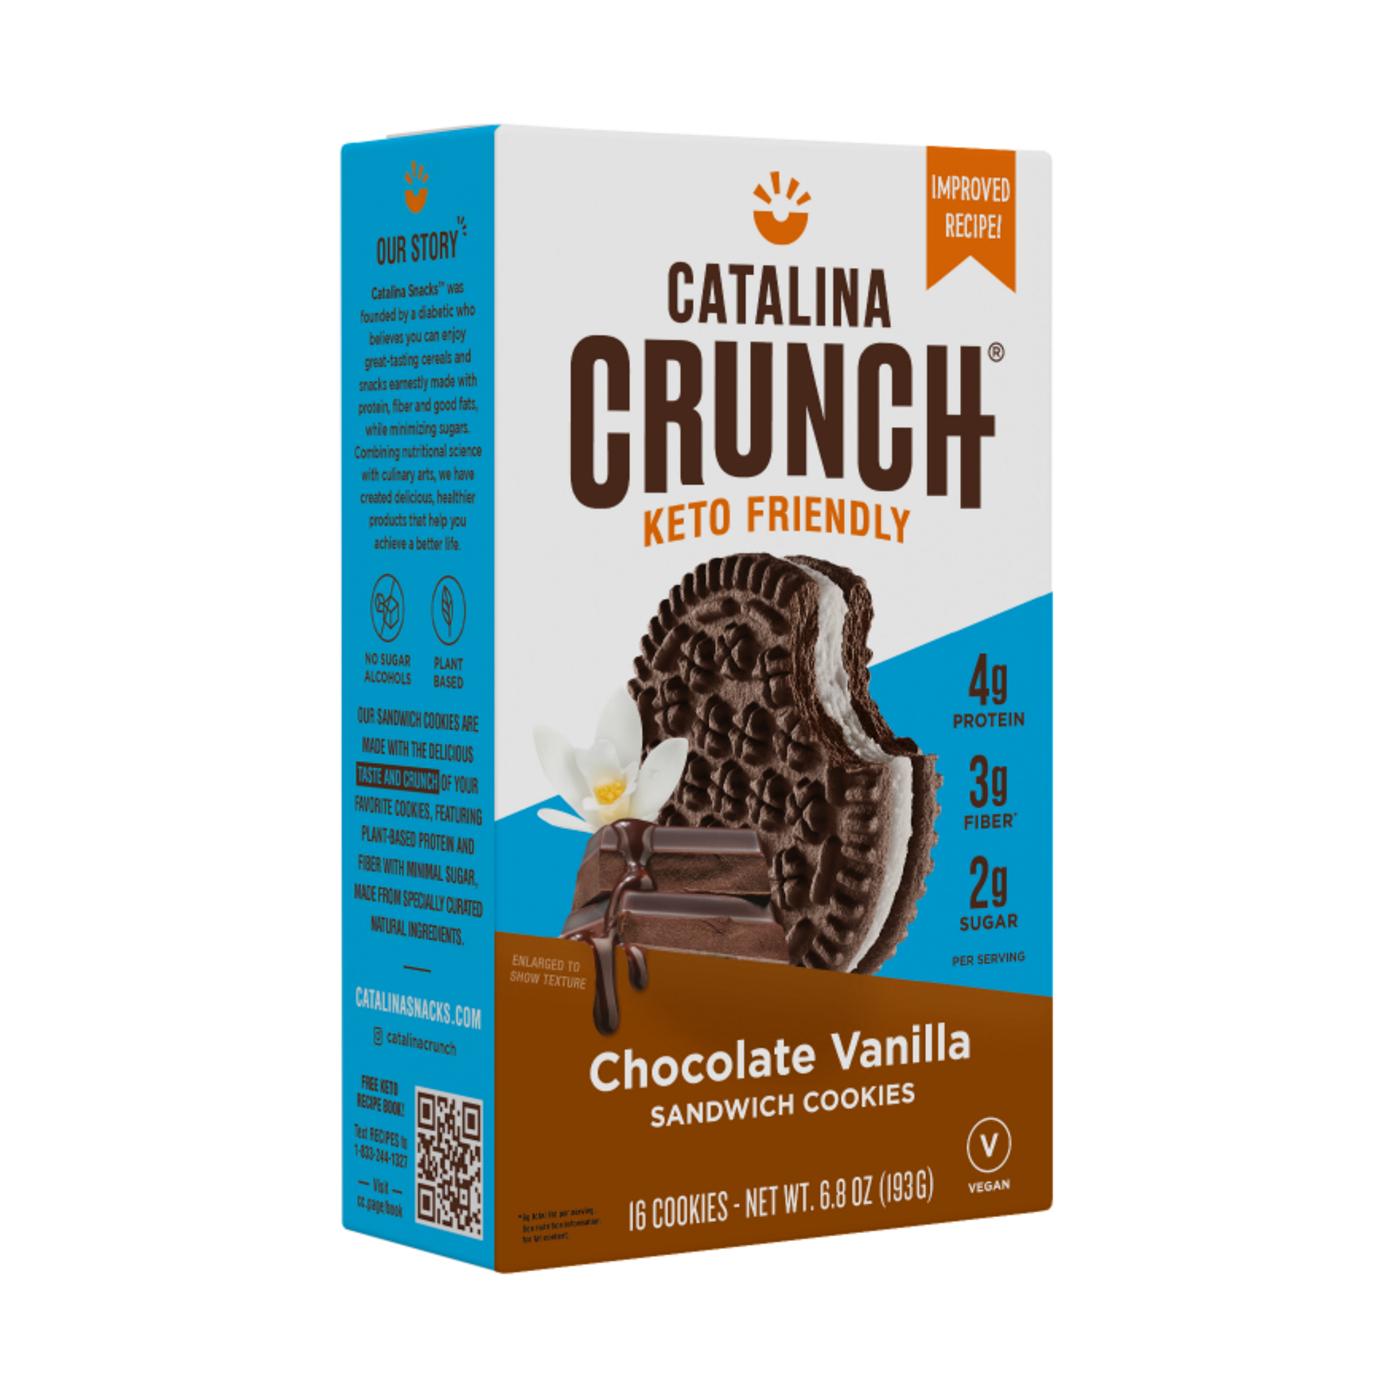 Catalina Crunch Keto Friendly Chocolate Vanilla Sandwich Cookies; image 1 of 3